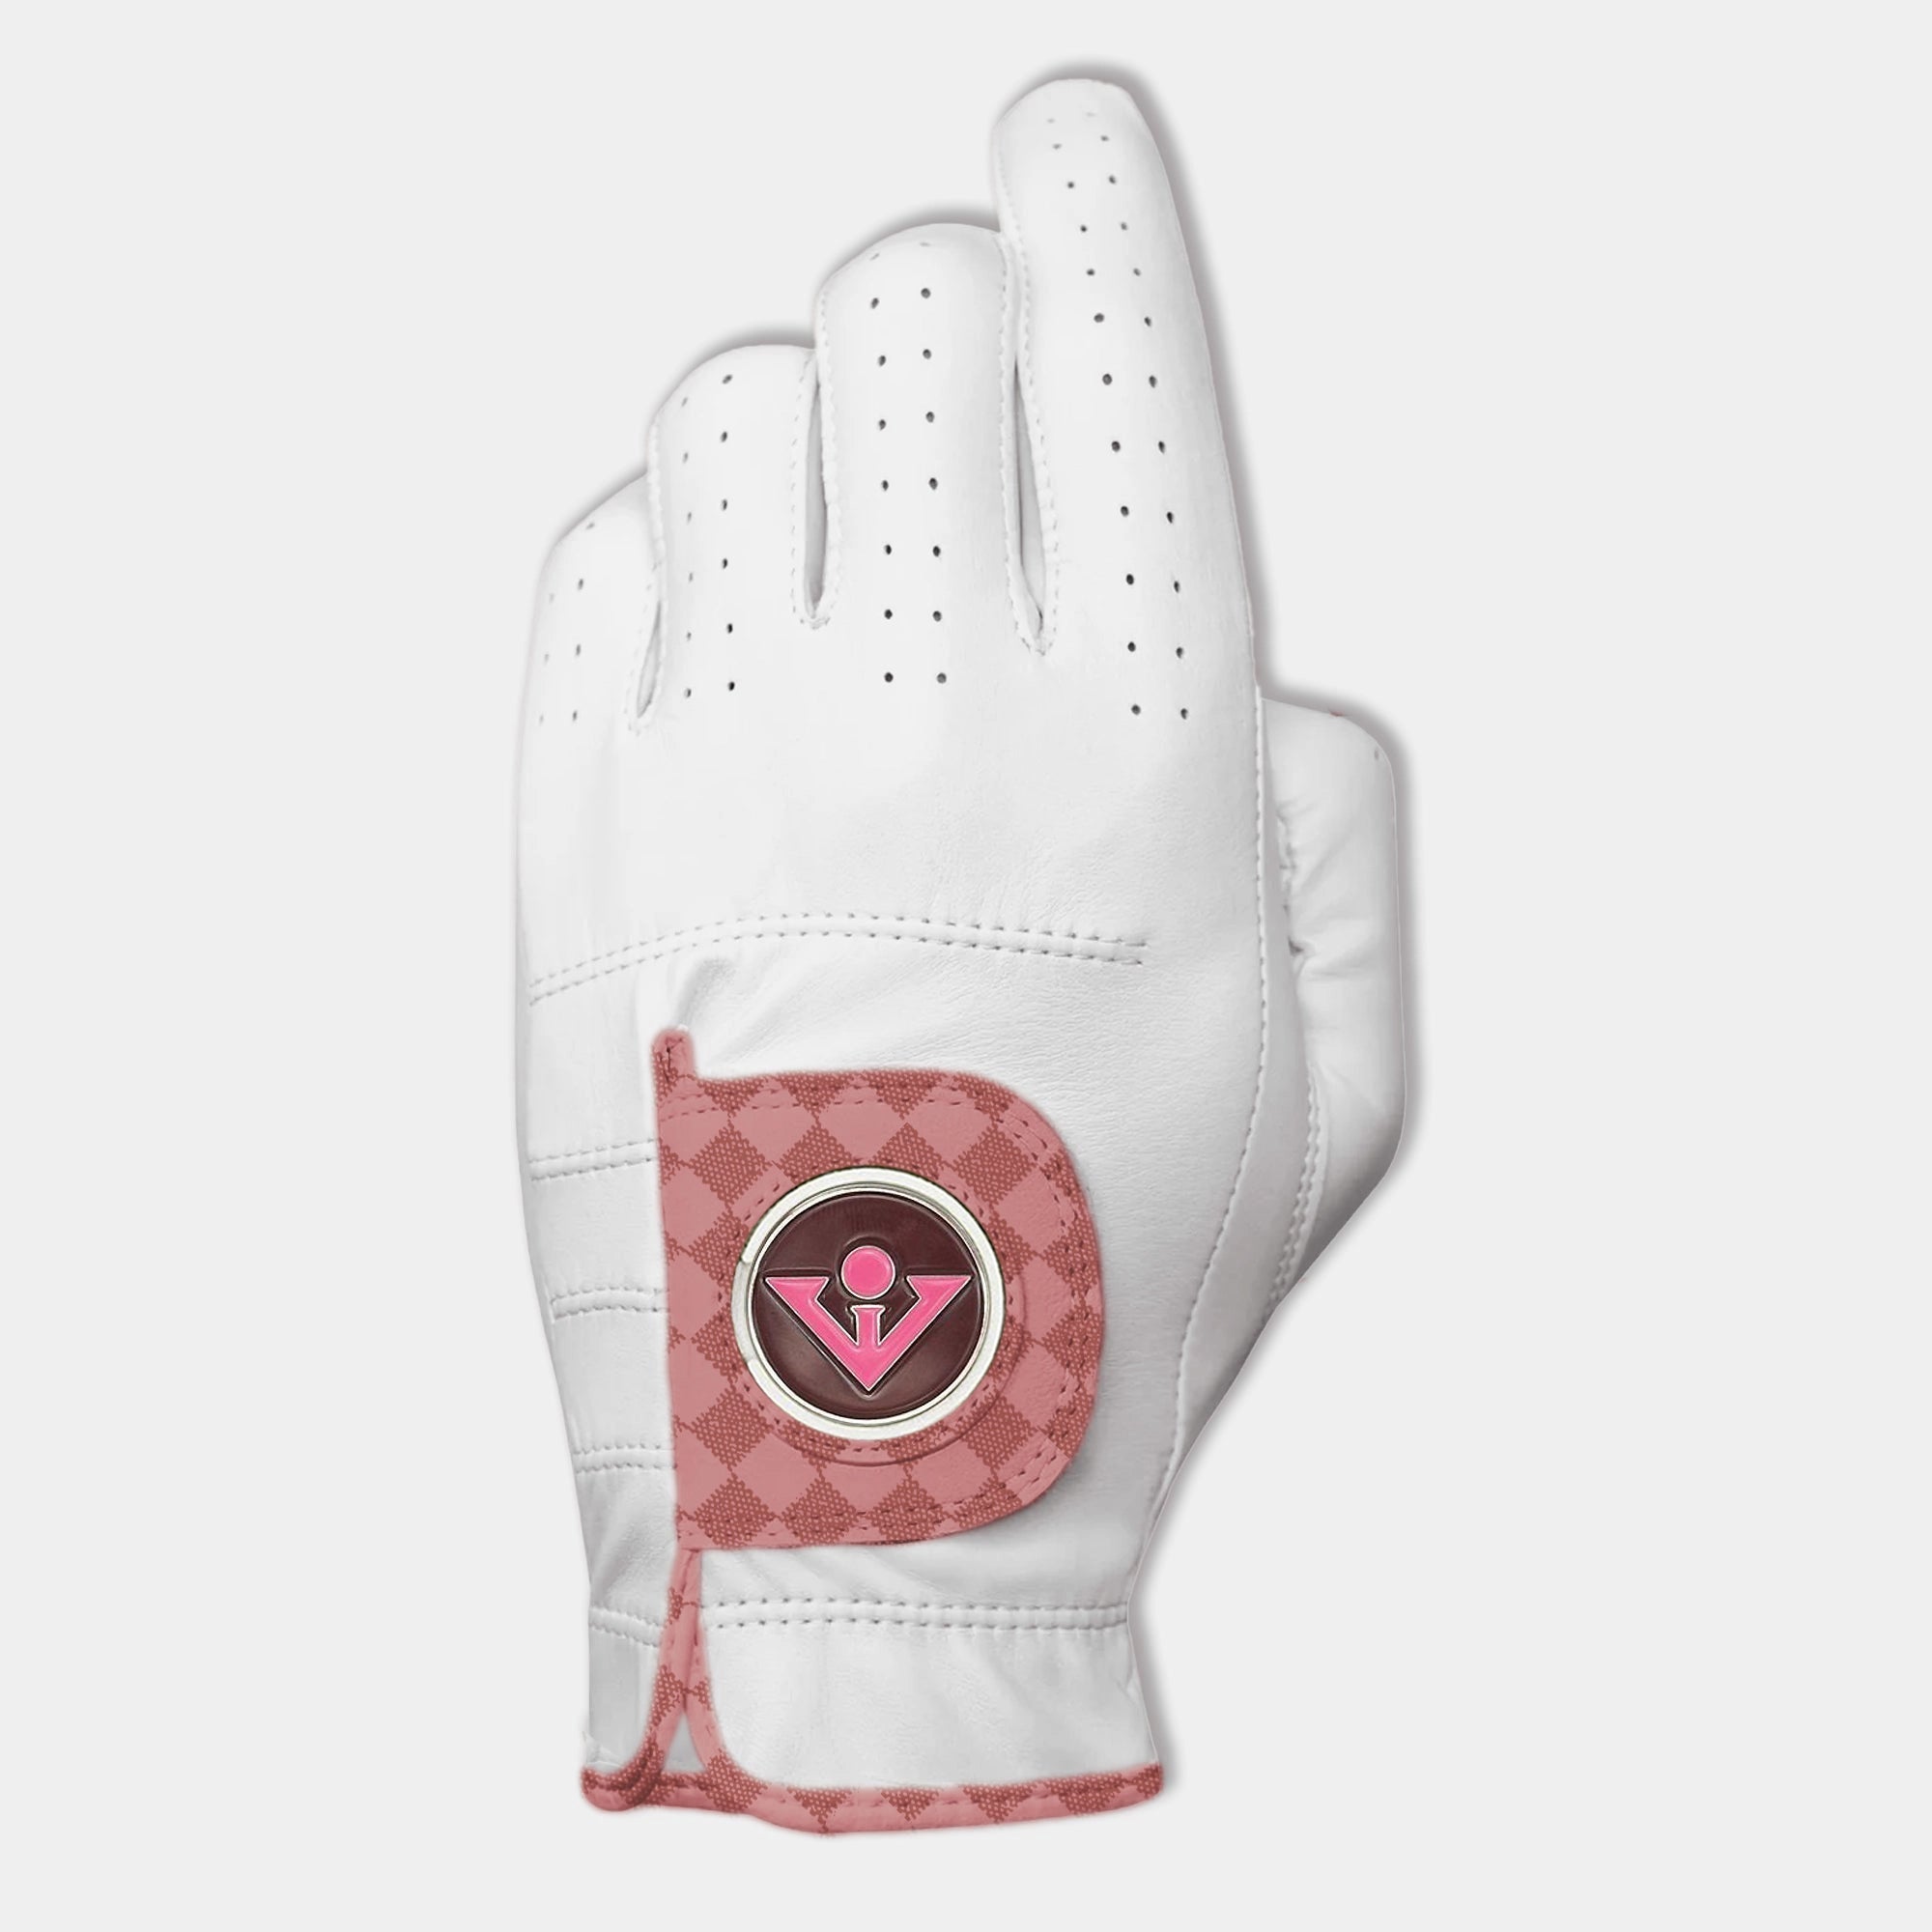 Women's pink Golf glove with checkered pull tab, designer golf gloves for women.